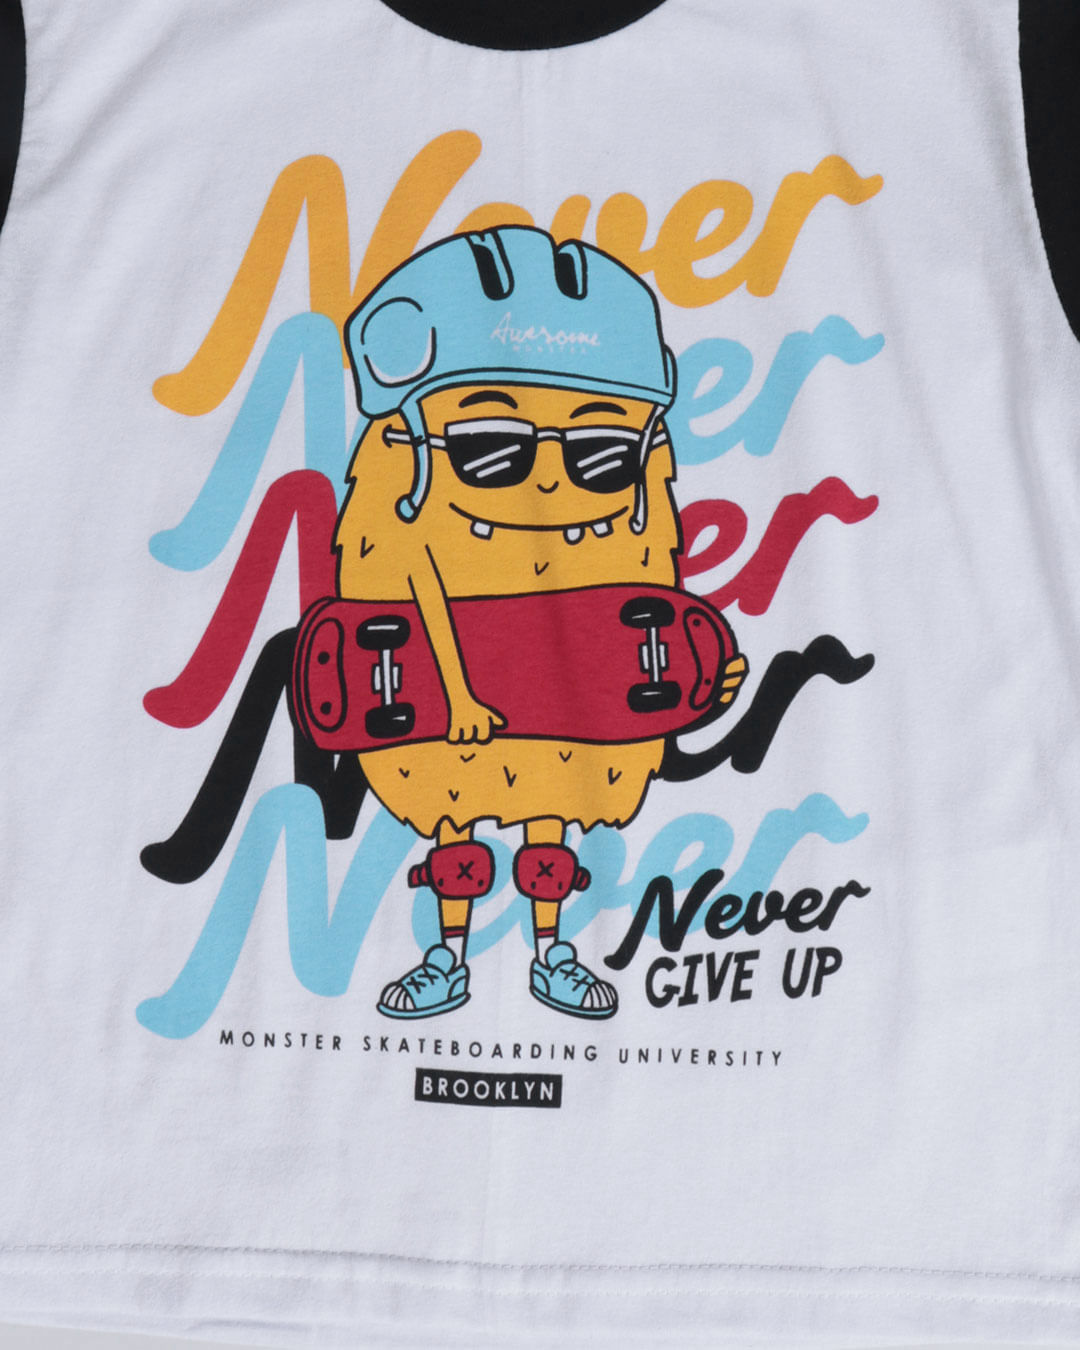 Camiseta-Bebe-Manga-Curta-Never-Give-UP-Branca